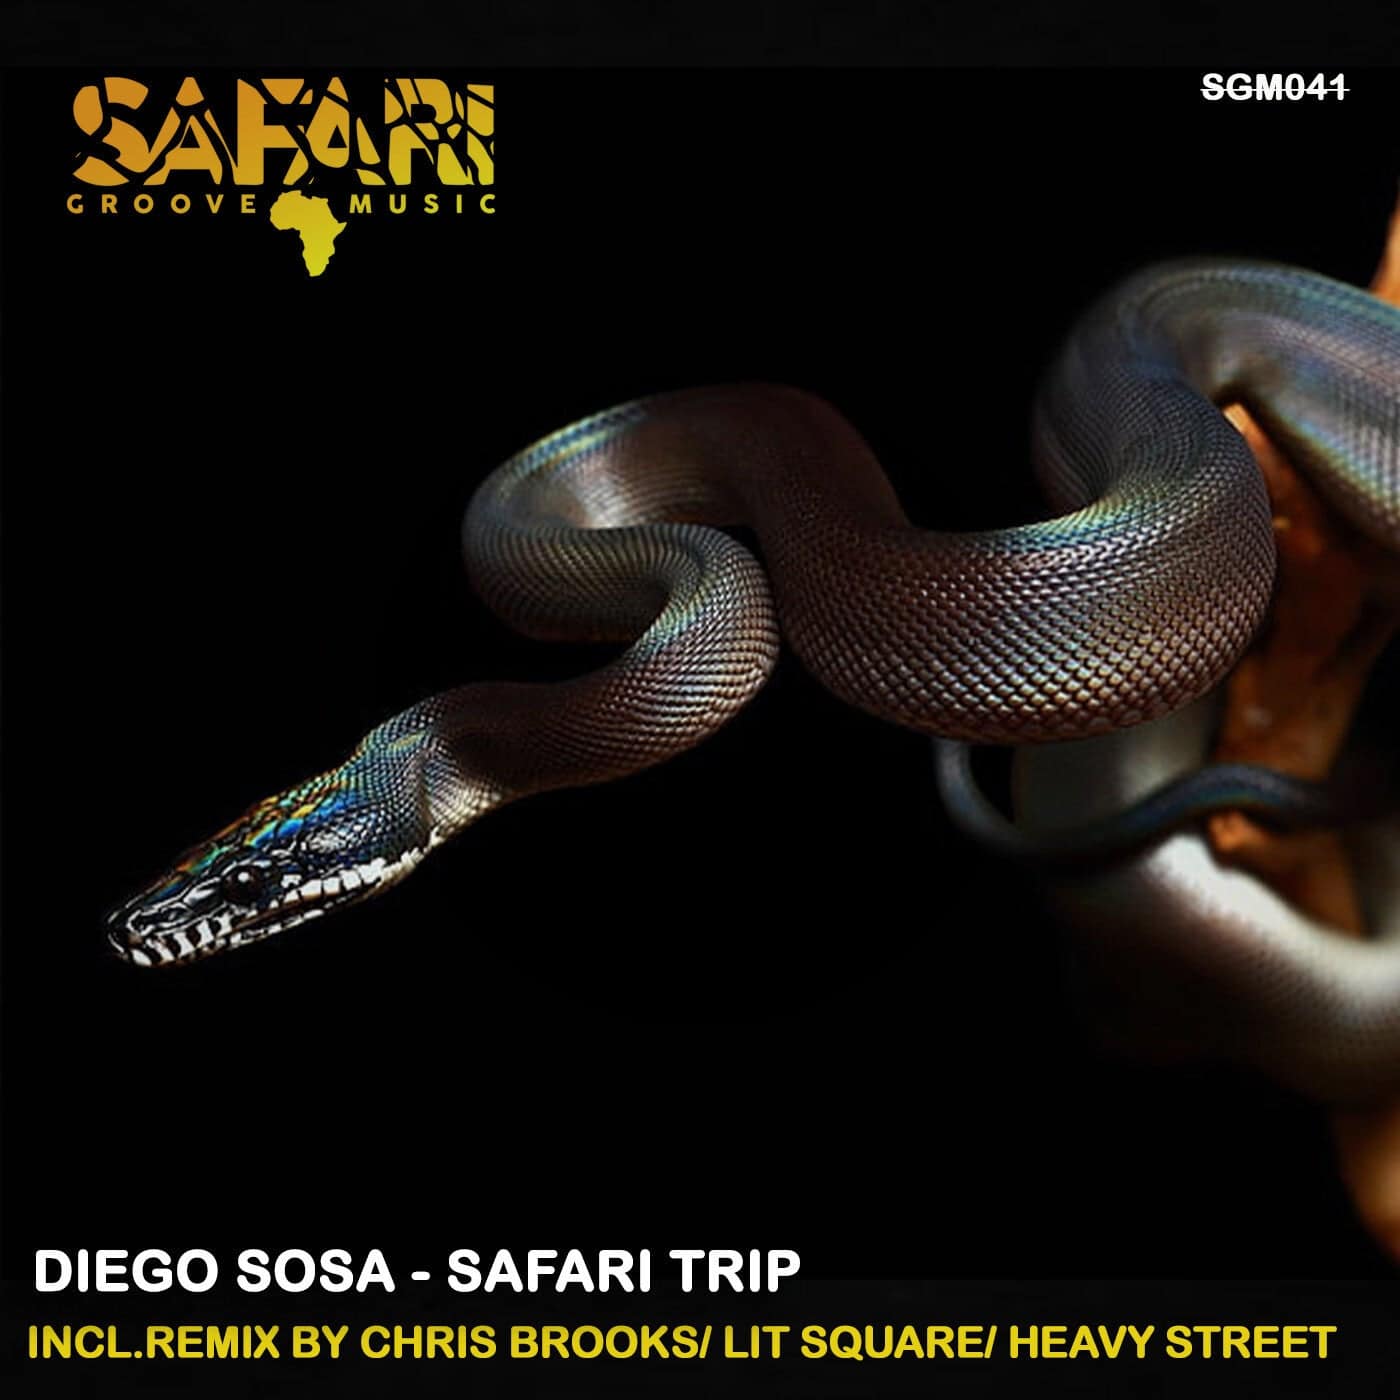 image cover: Diego Sosa - Safari Trip / SGM041